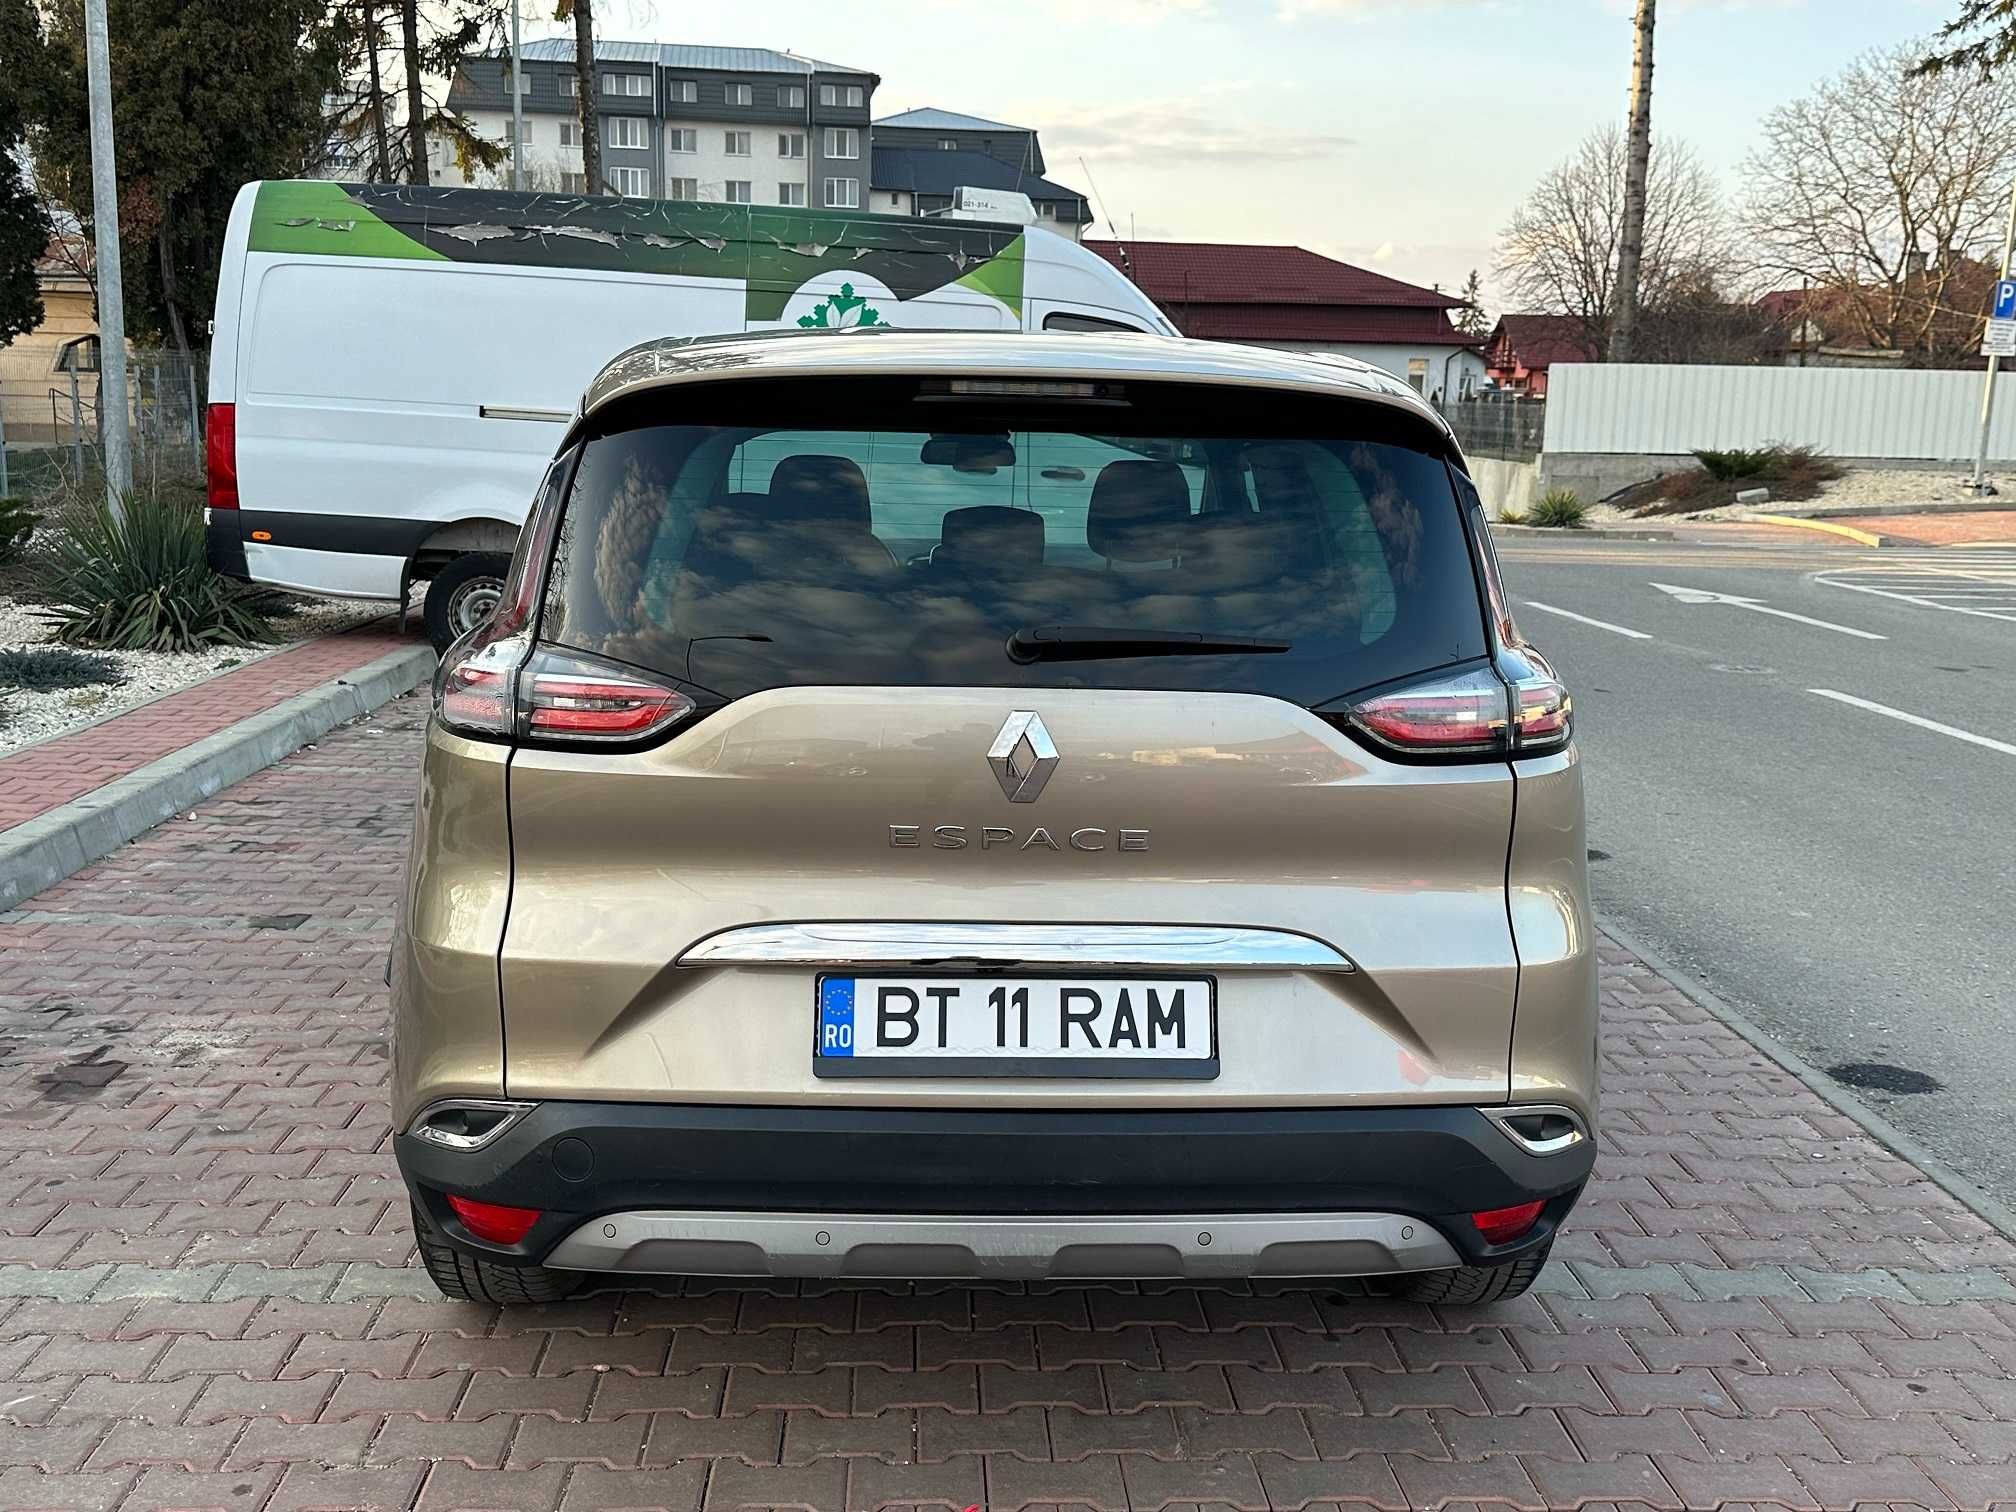 Renault Espace 1,6 dci 2018  panoramic moka-brown accept variante !!!